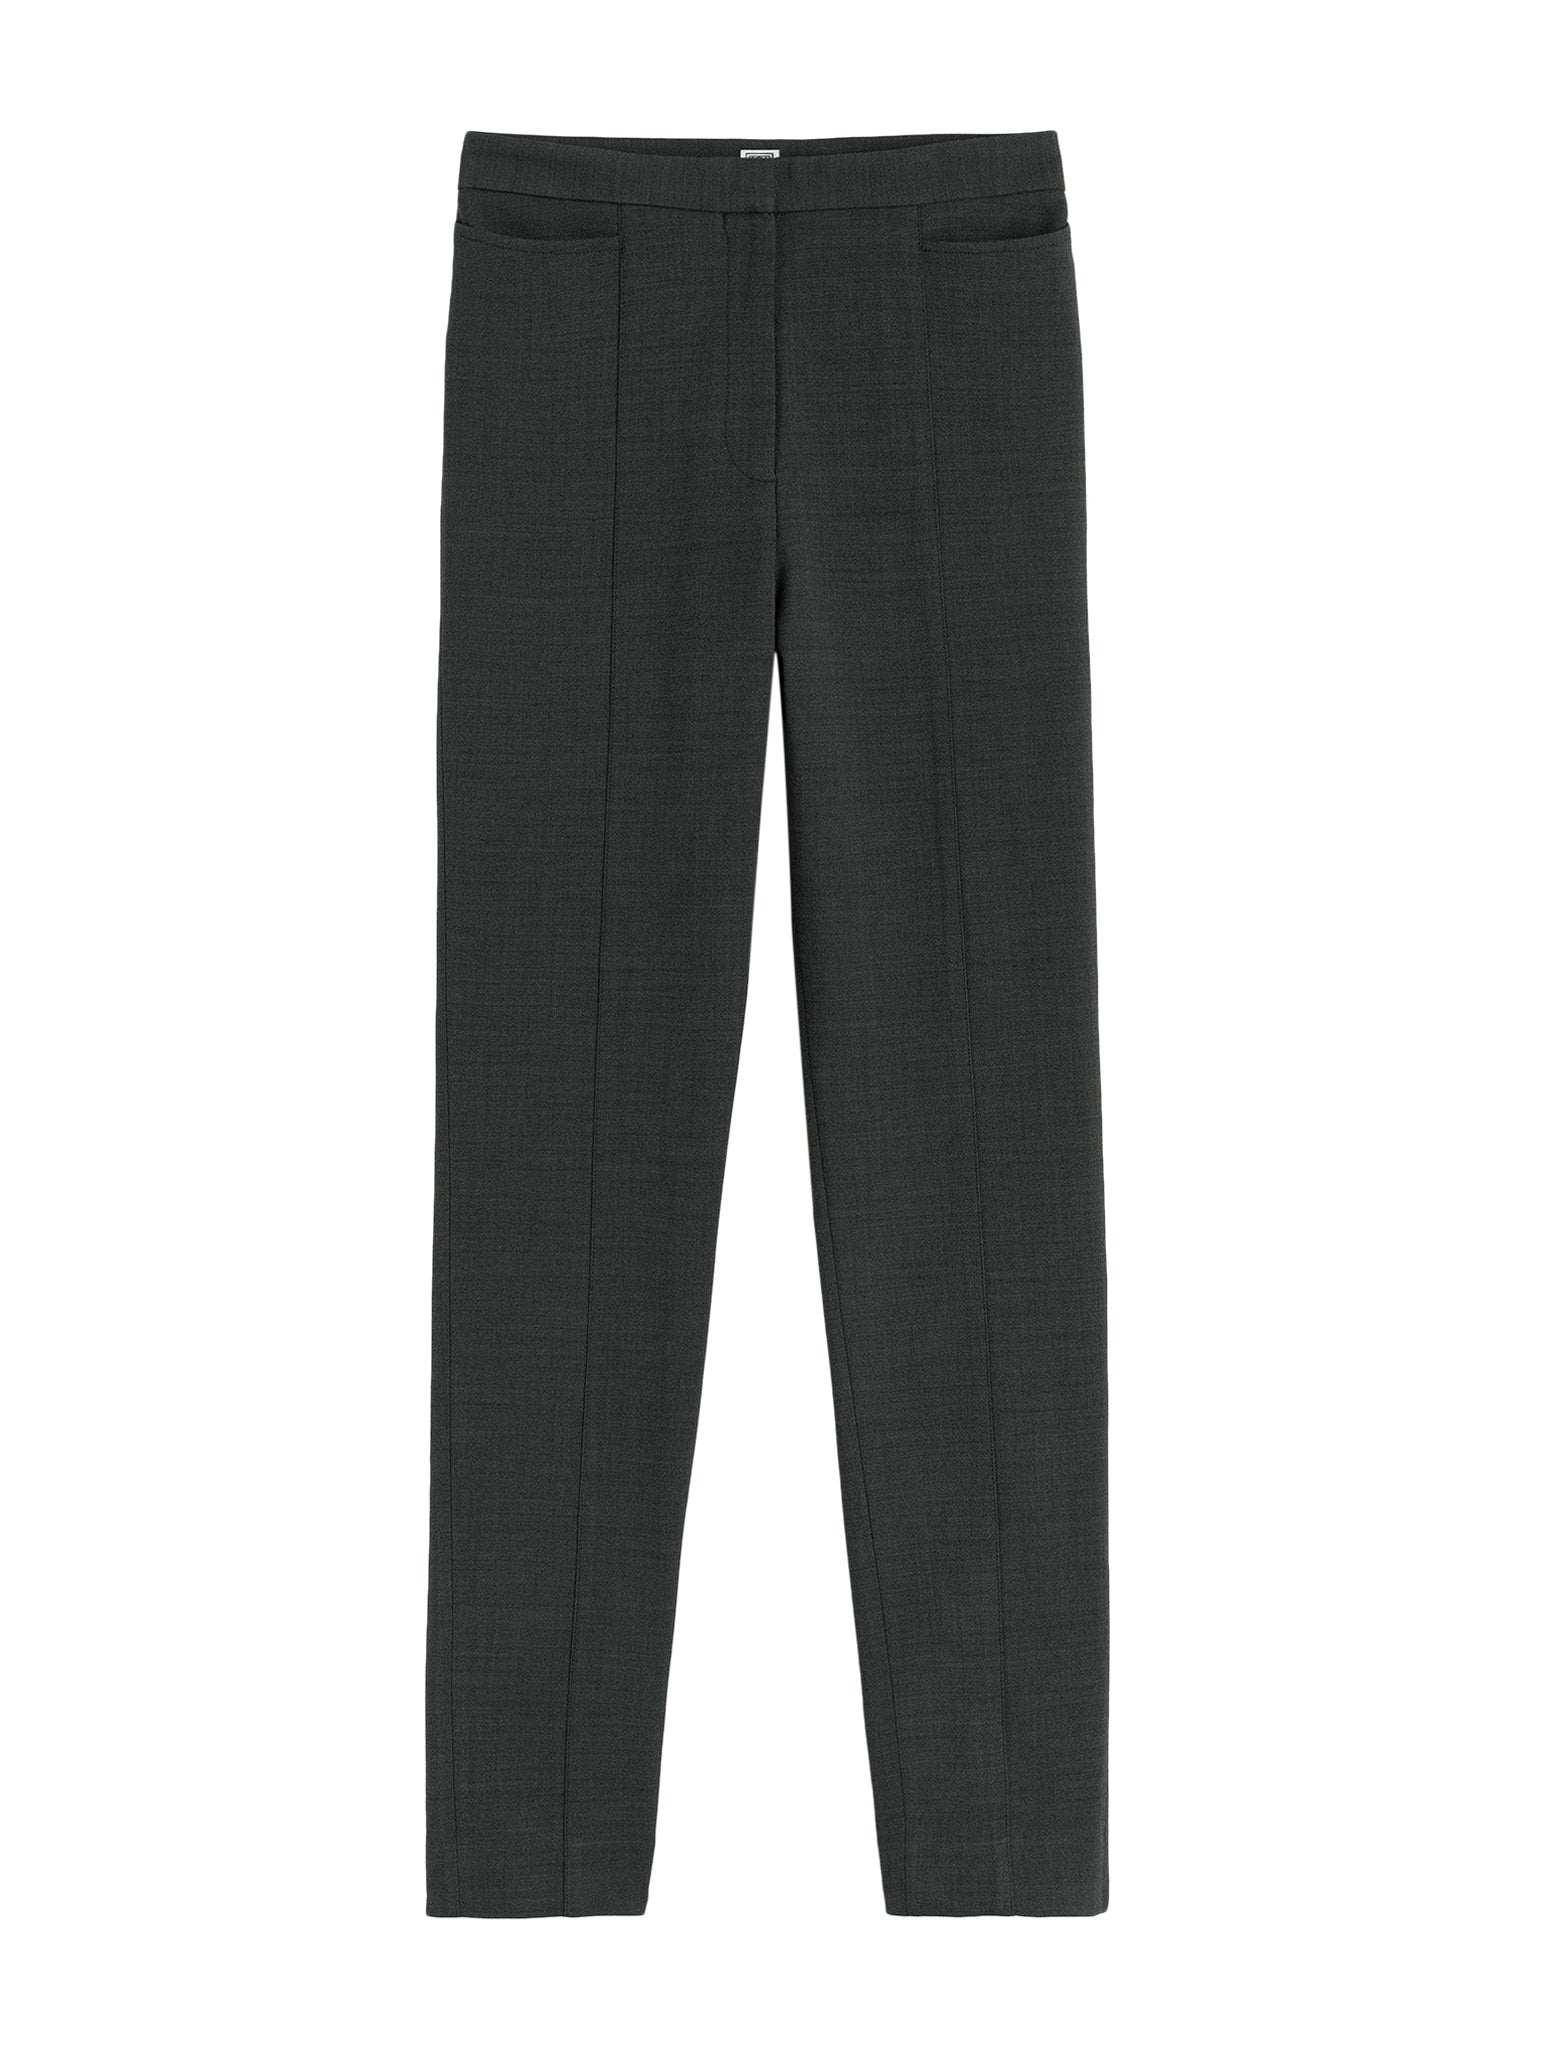 Slim crepe suit trousers charcoal melange